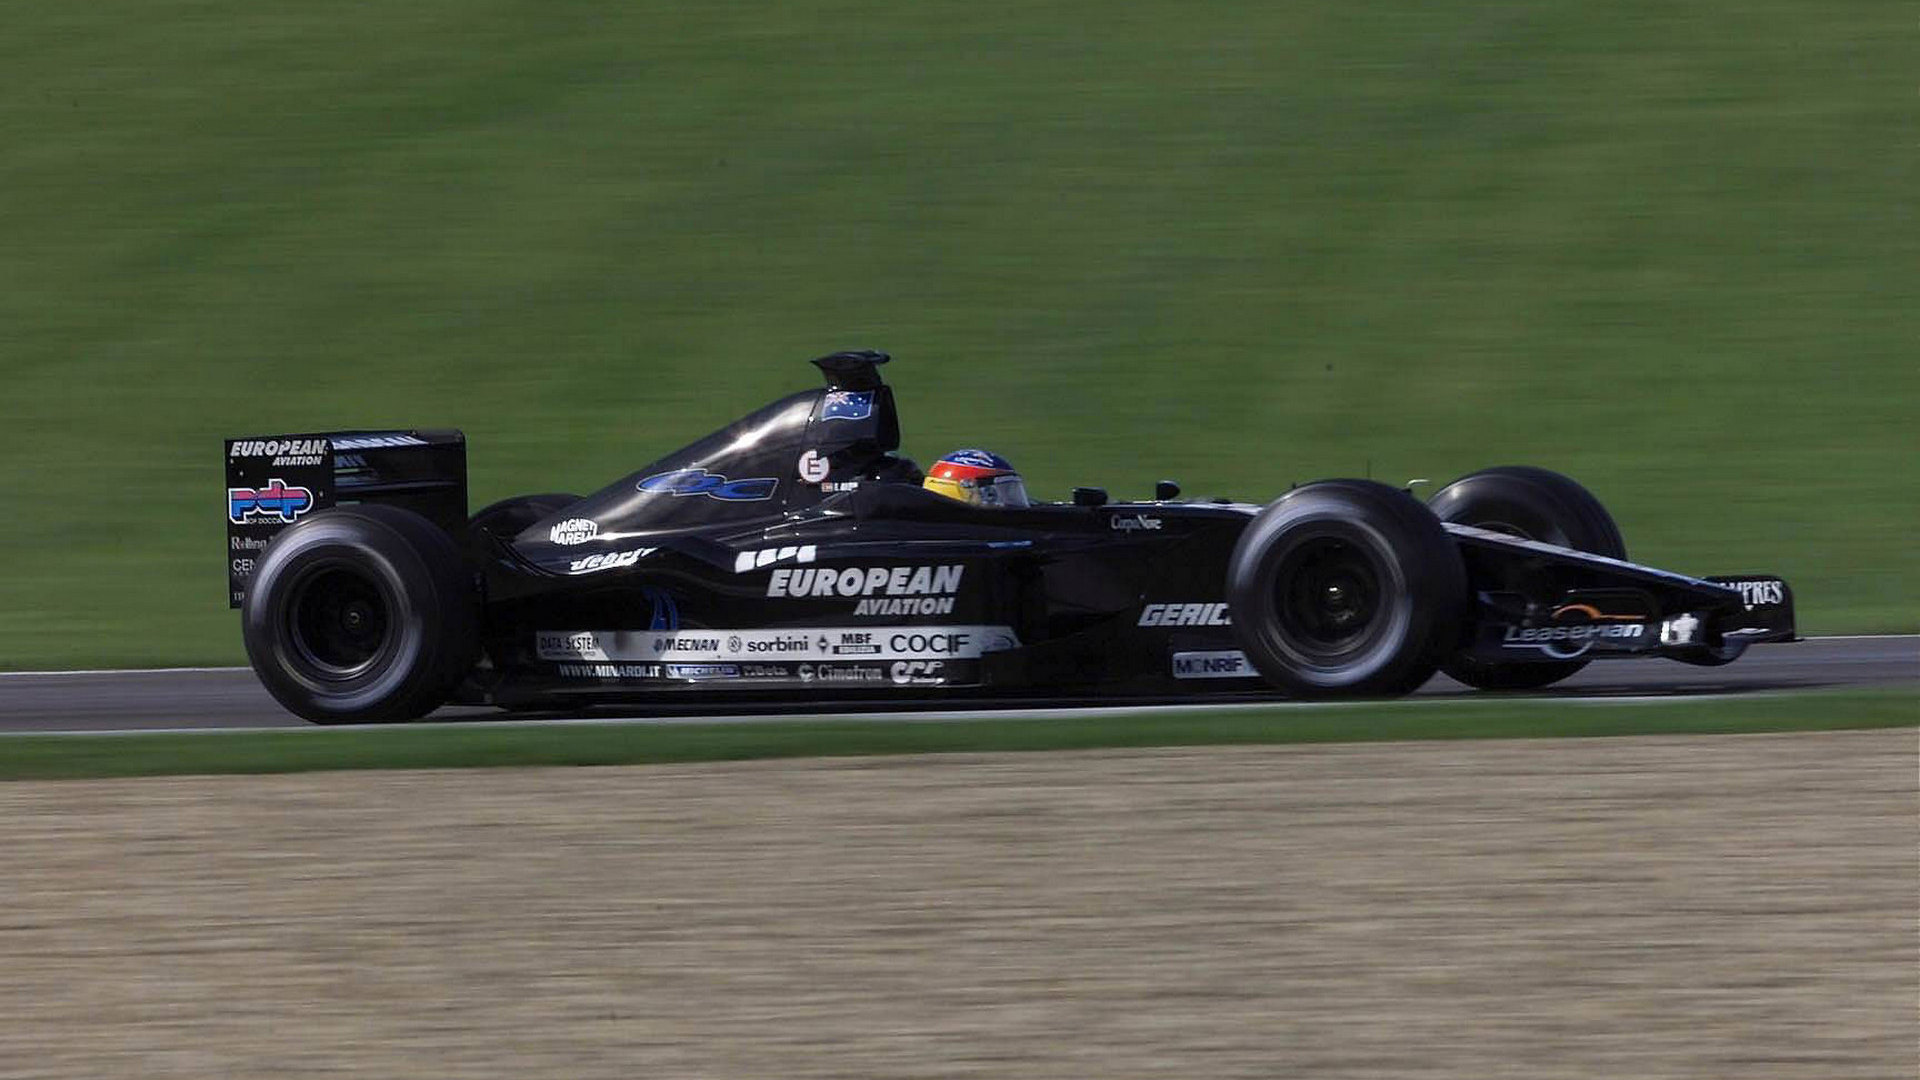 HD Wallpapers 2001 Formula 1 Grand Prix of San Marino | F1-Fansite.com